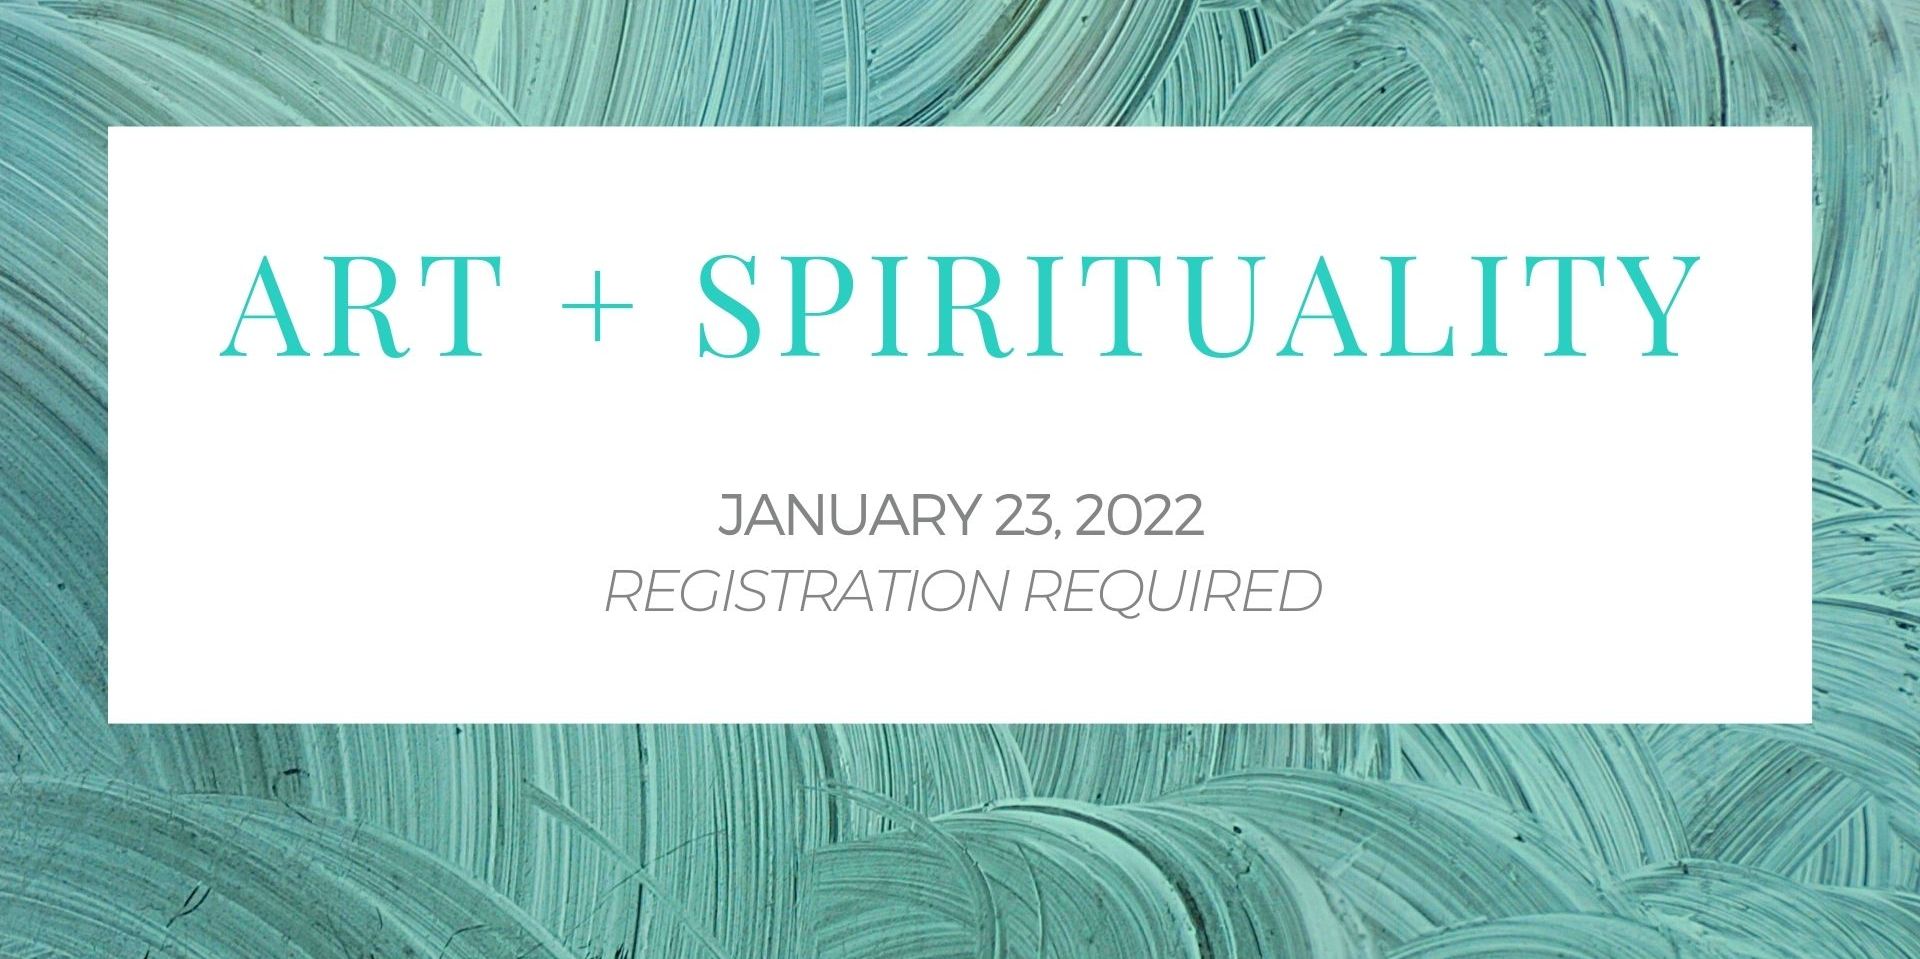 Art + Spirituality promotional image